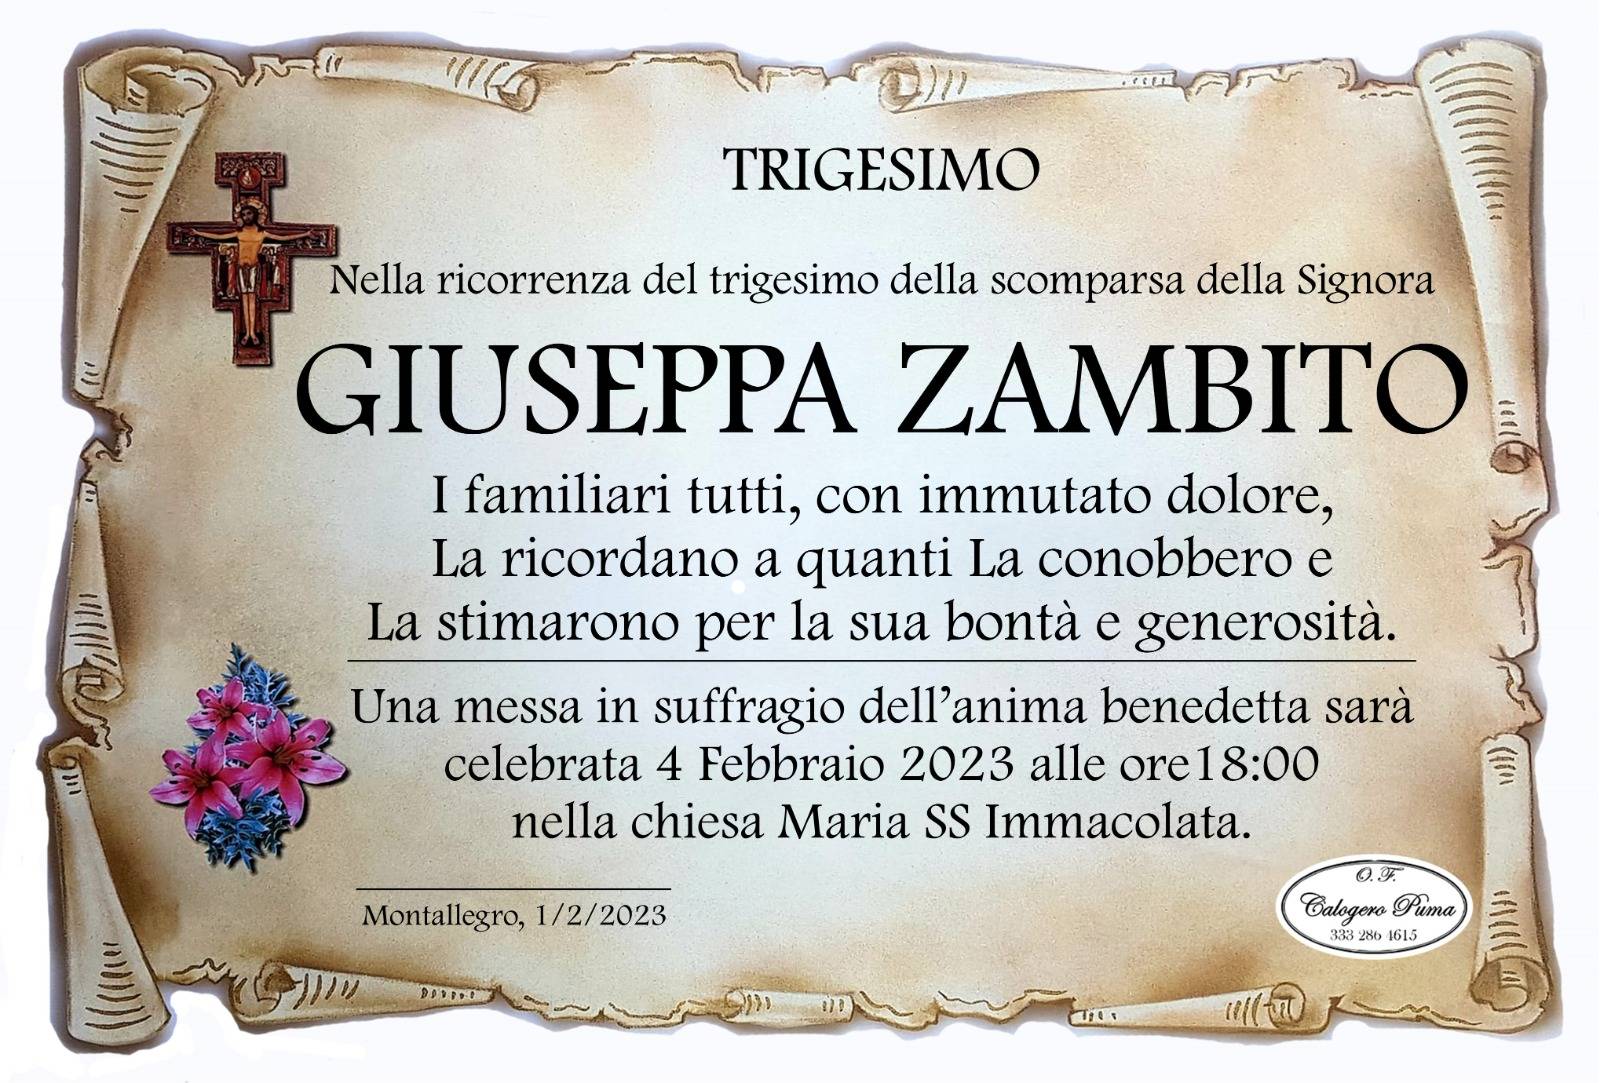 Giuseppa Zambito